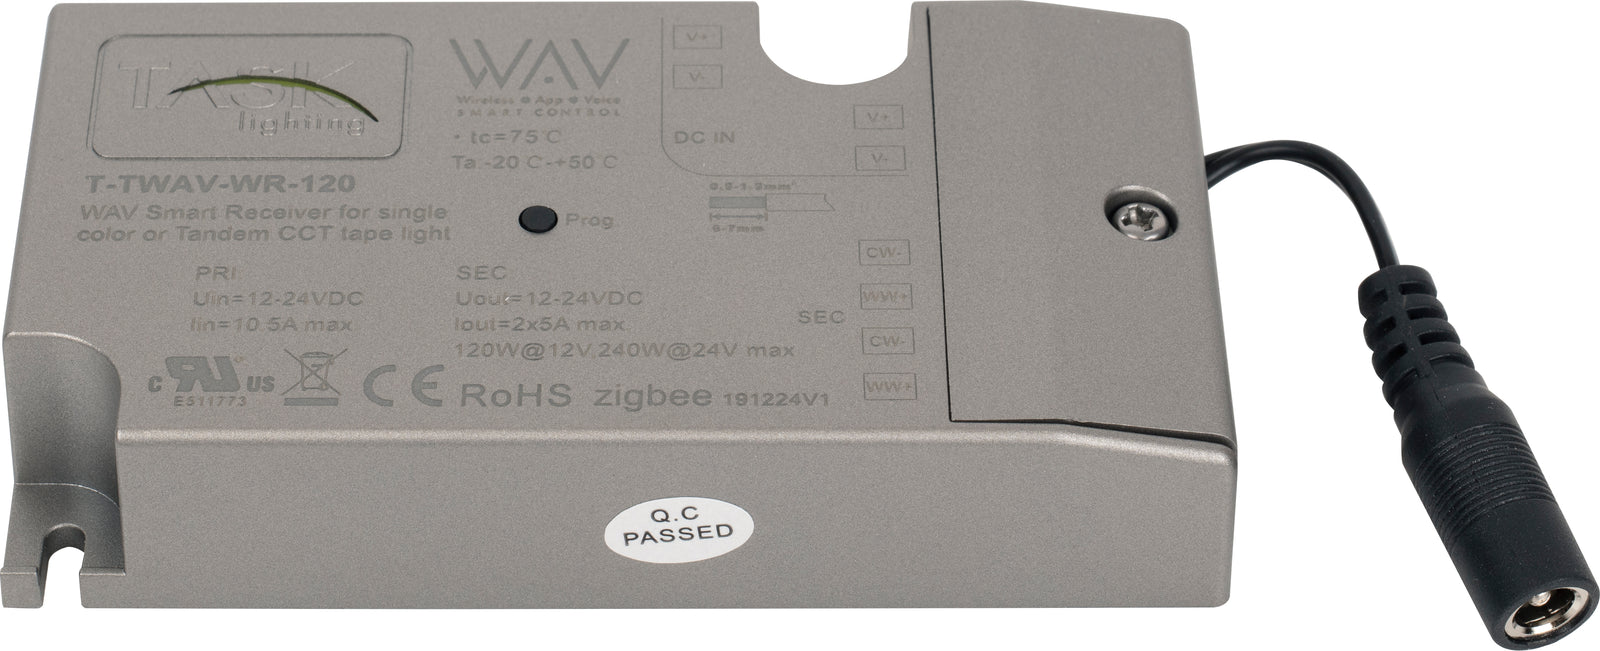 WAV Smart Receiver for single color or Tandem CCT tape light & Puck